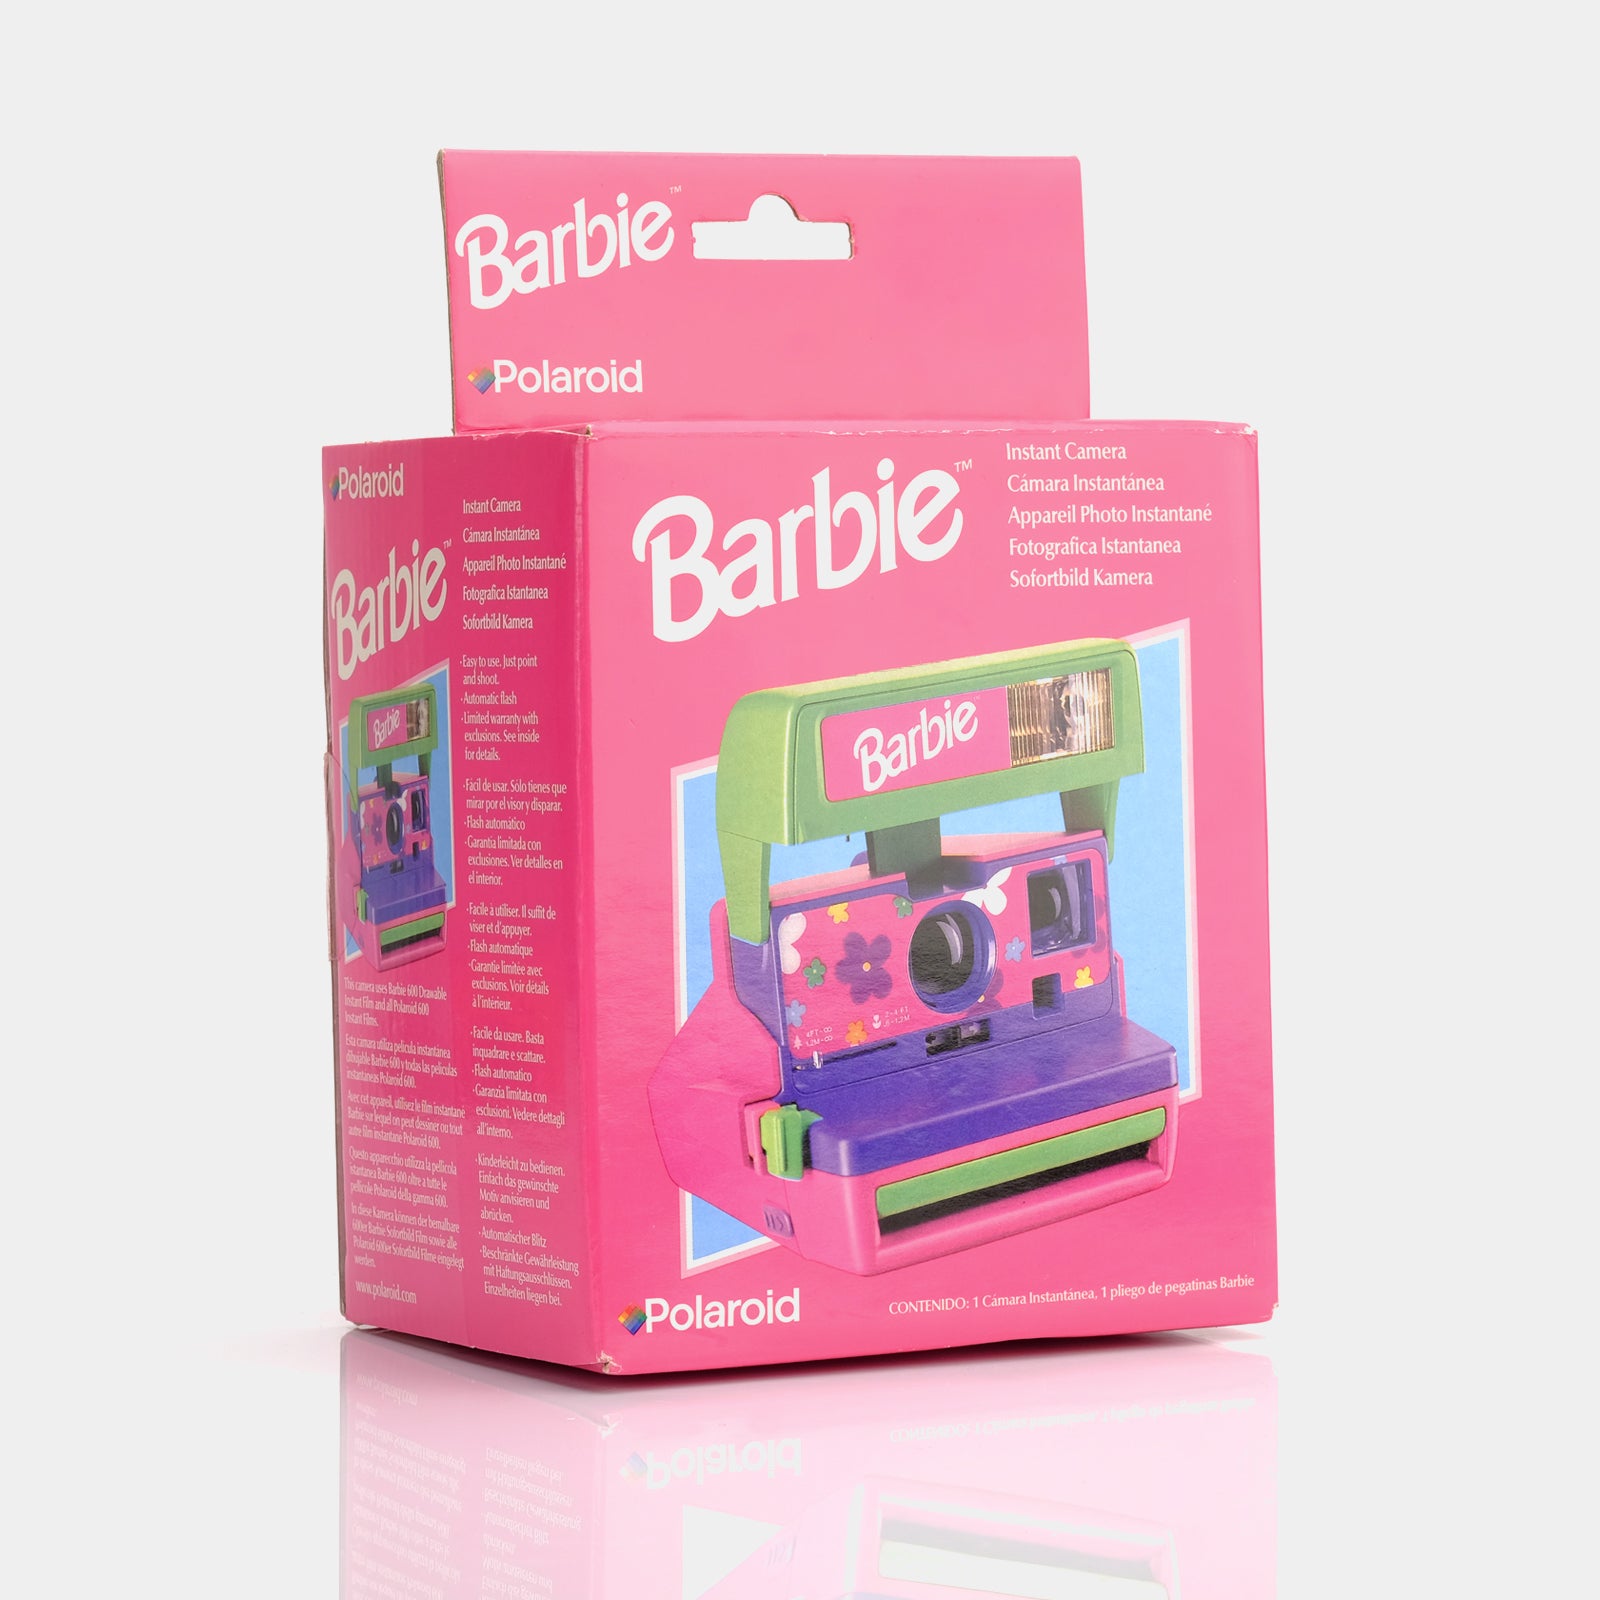 Polaroid 600 90s Barbie Instant Film Camera - New in Box